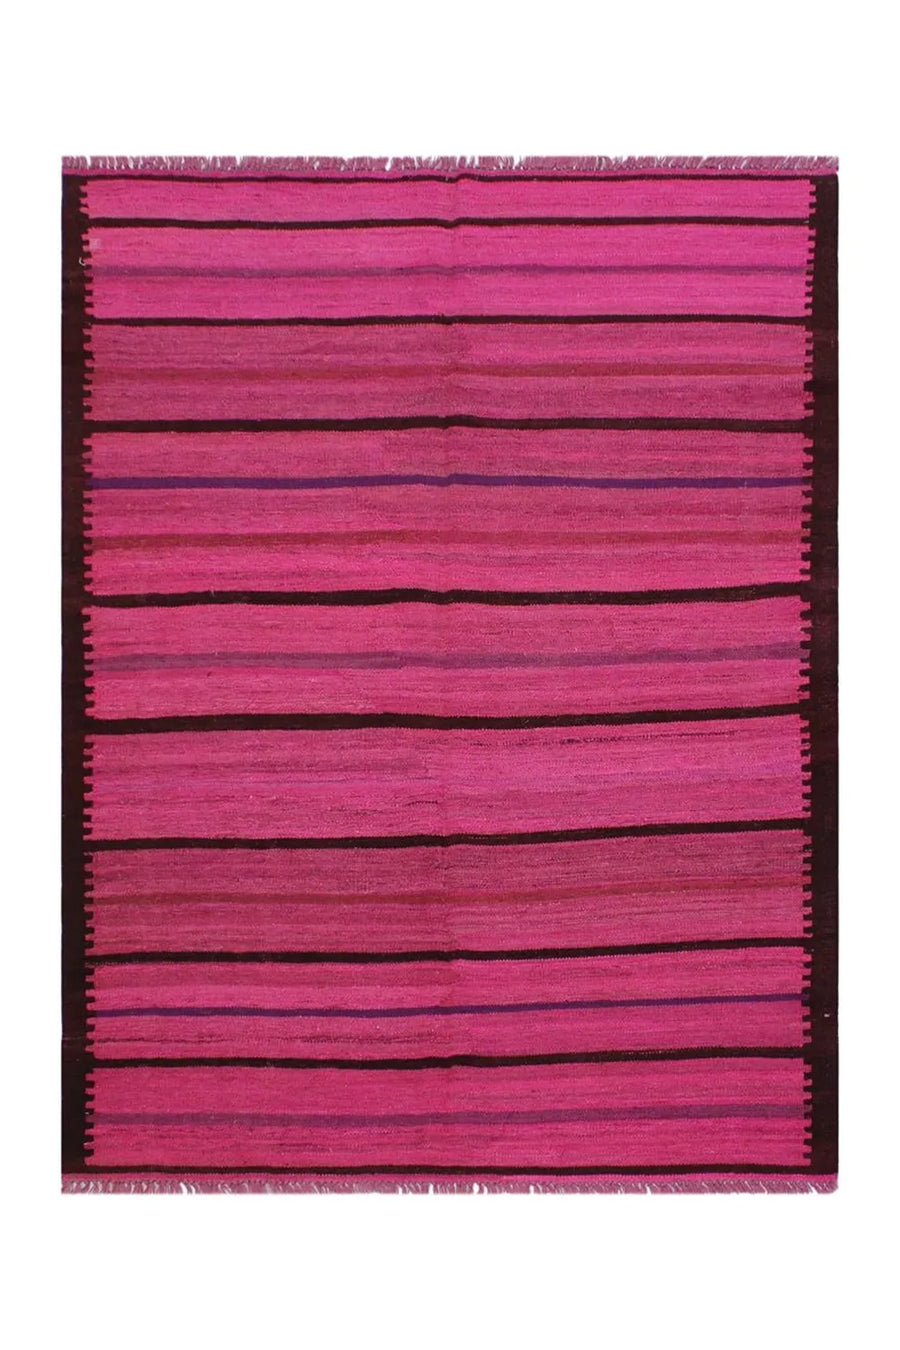 Vivid Hot Pink Boho Kilim Area Rug in Chic 5x8 Size